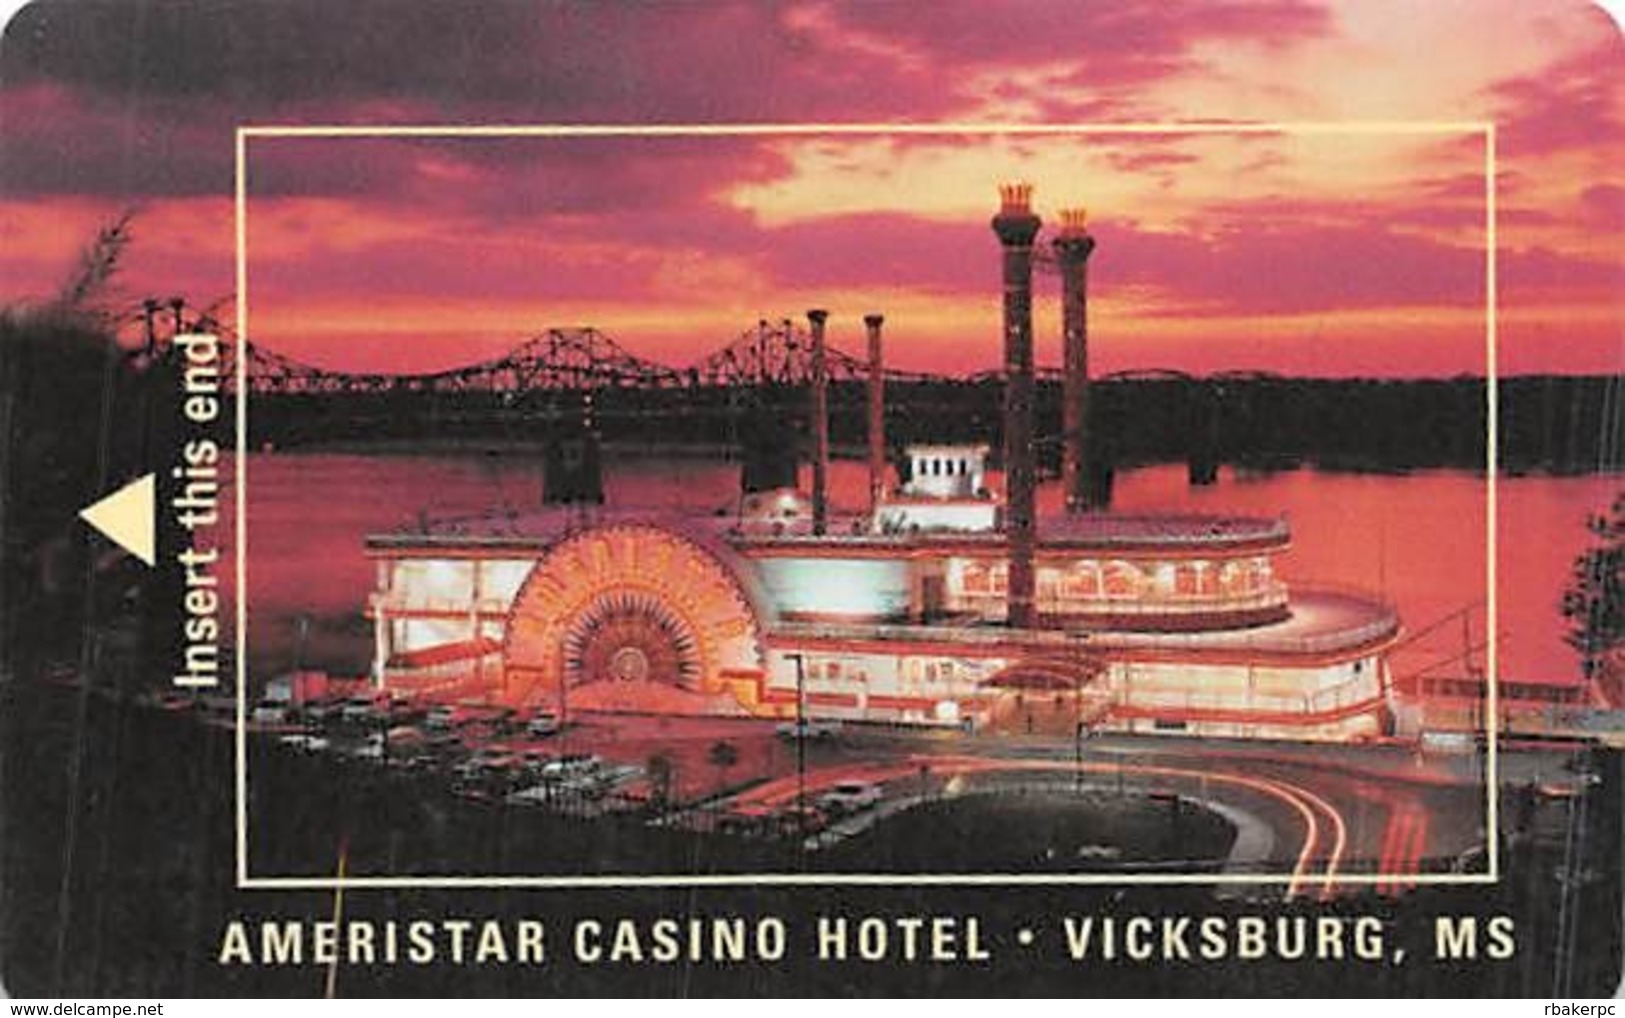 Ameristar Casino - Vicksburg MS - Hotel Room Key Card - Hotel Keycards